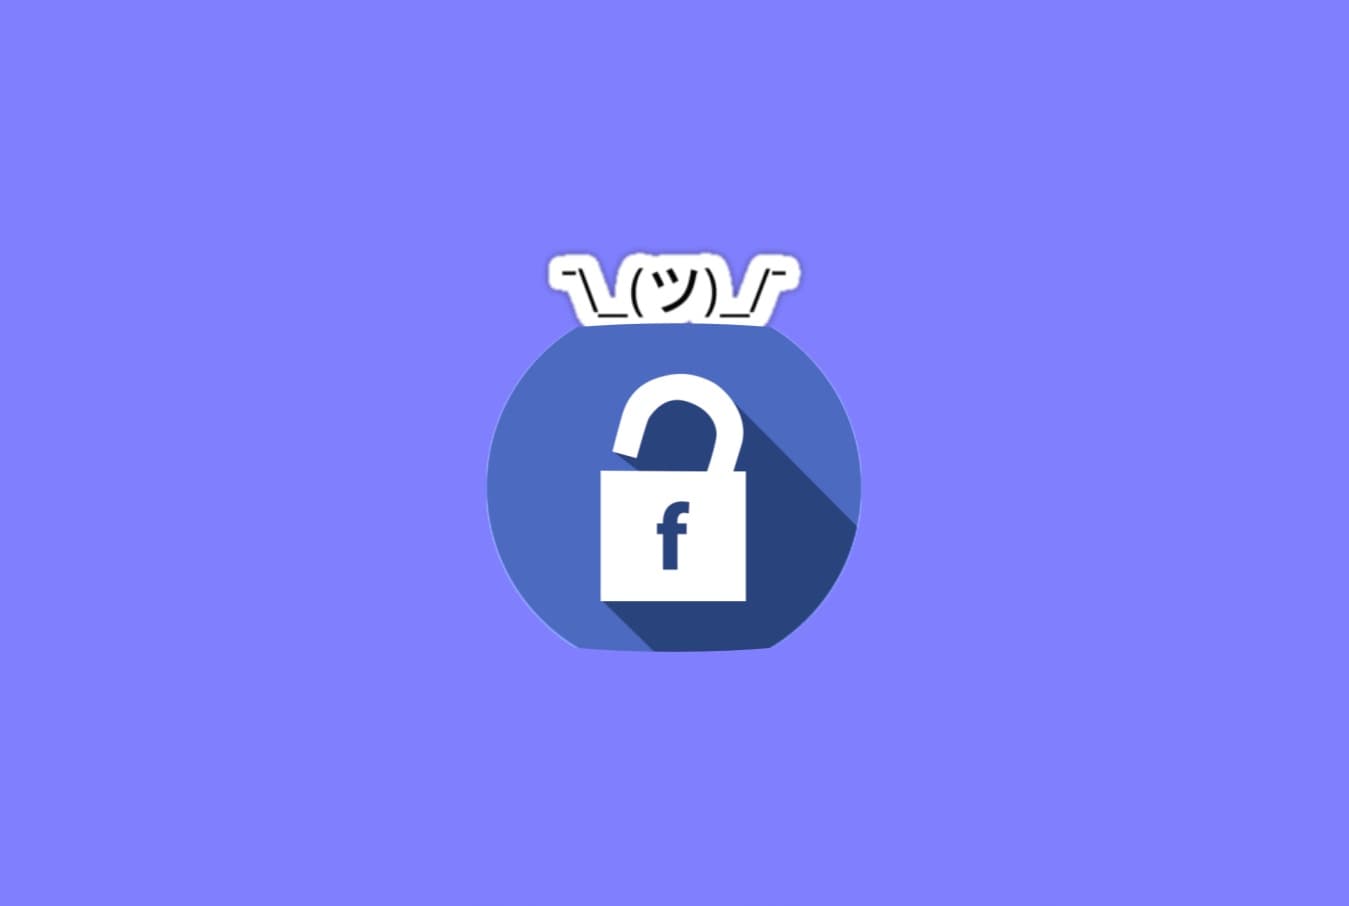 Social media giant Facebook suffers data breach AGAIN